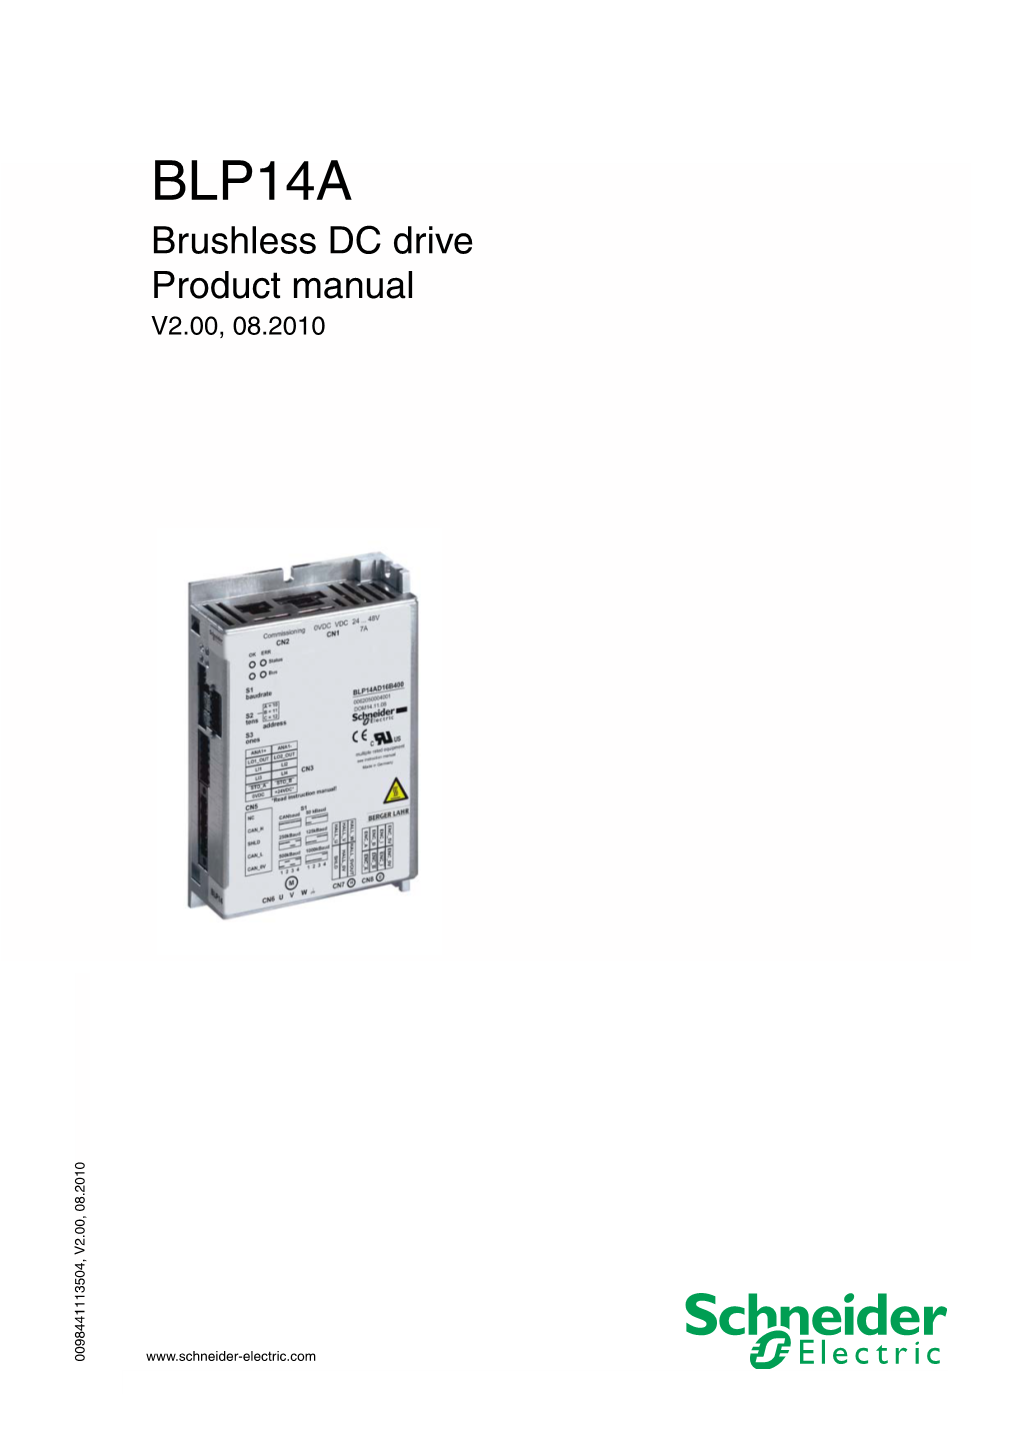 BLP14A Brushless DC Drive Product Manual V2.00, 08.2010